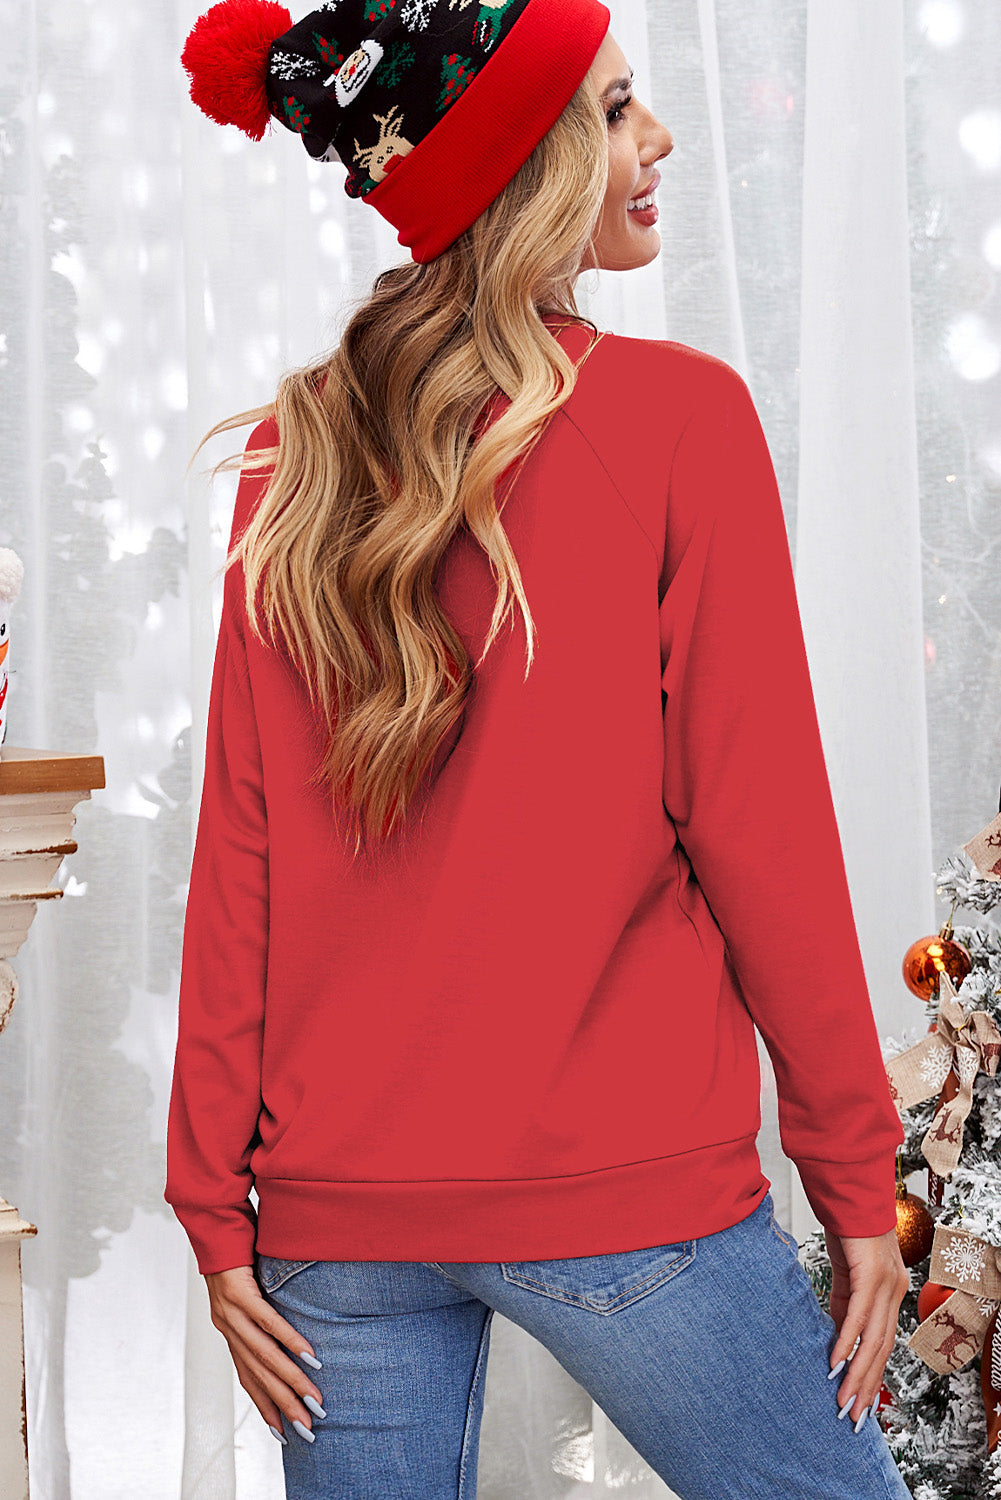 Red Merry And Bright Xmas Tree Print Sweatshirt